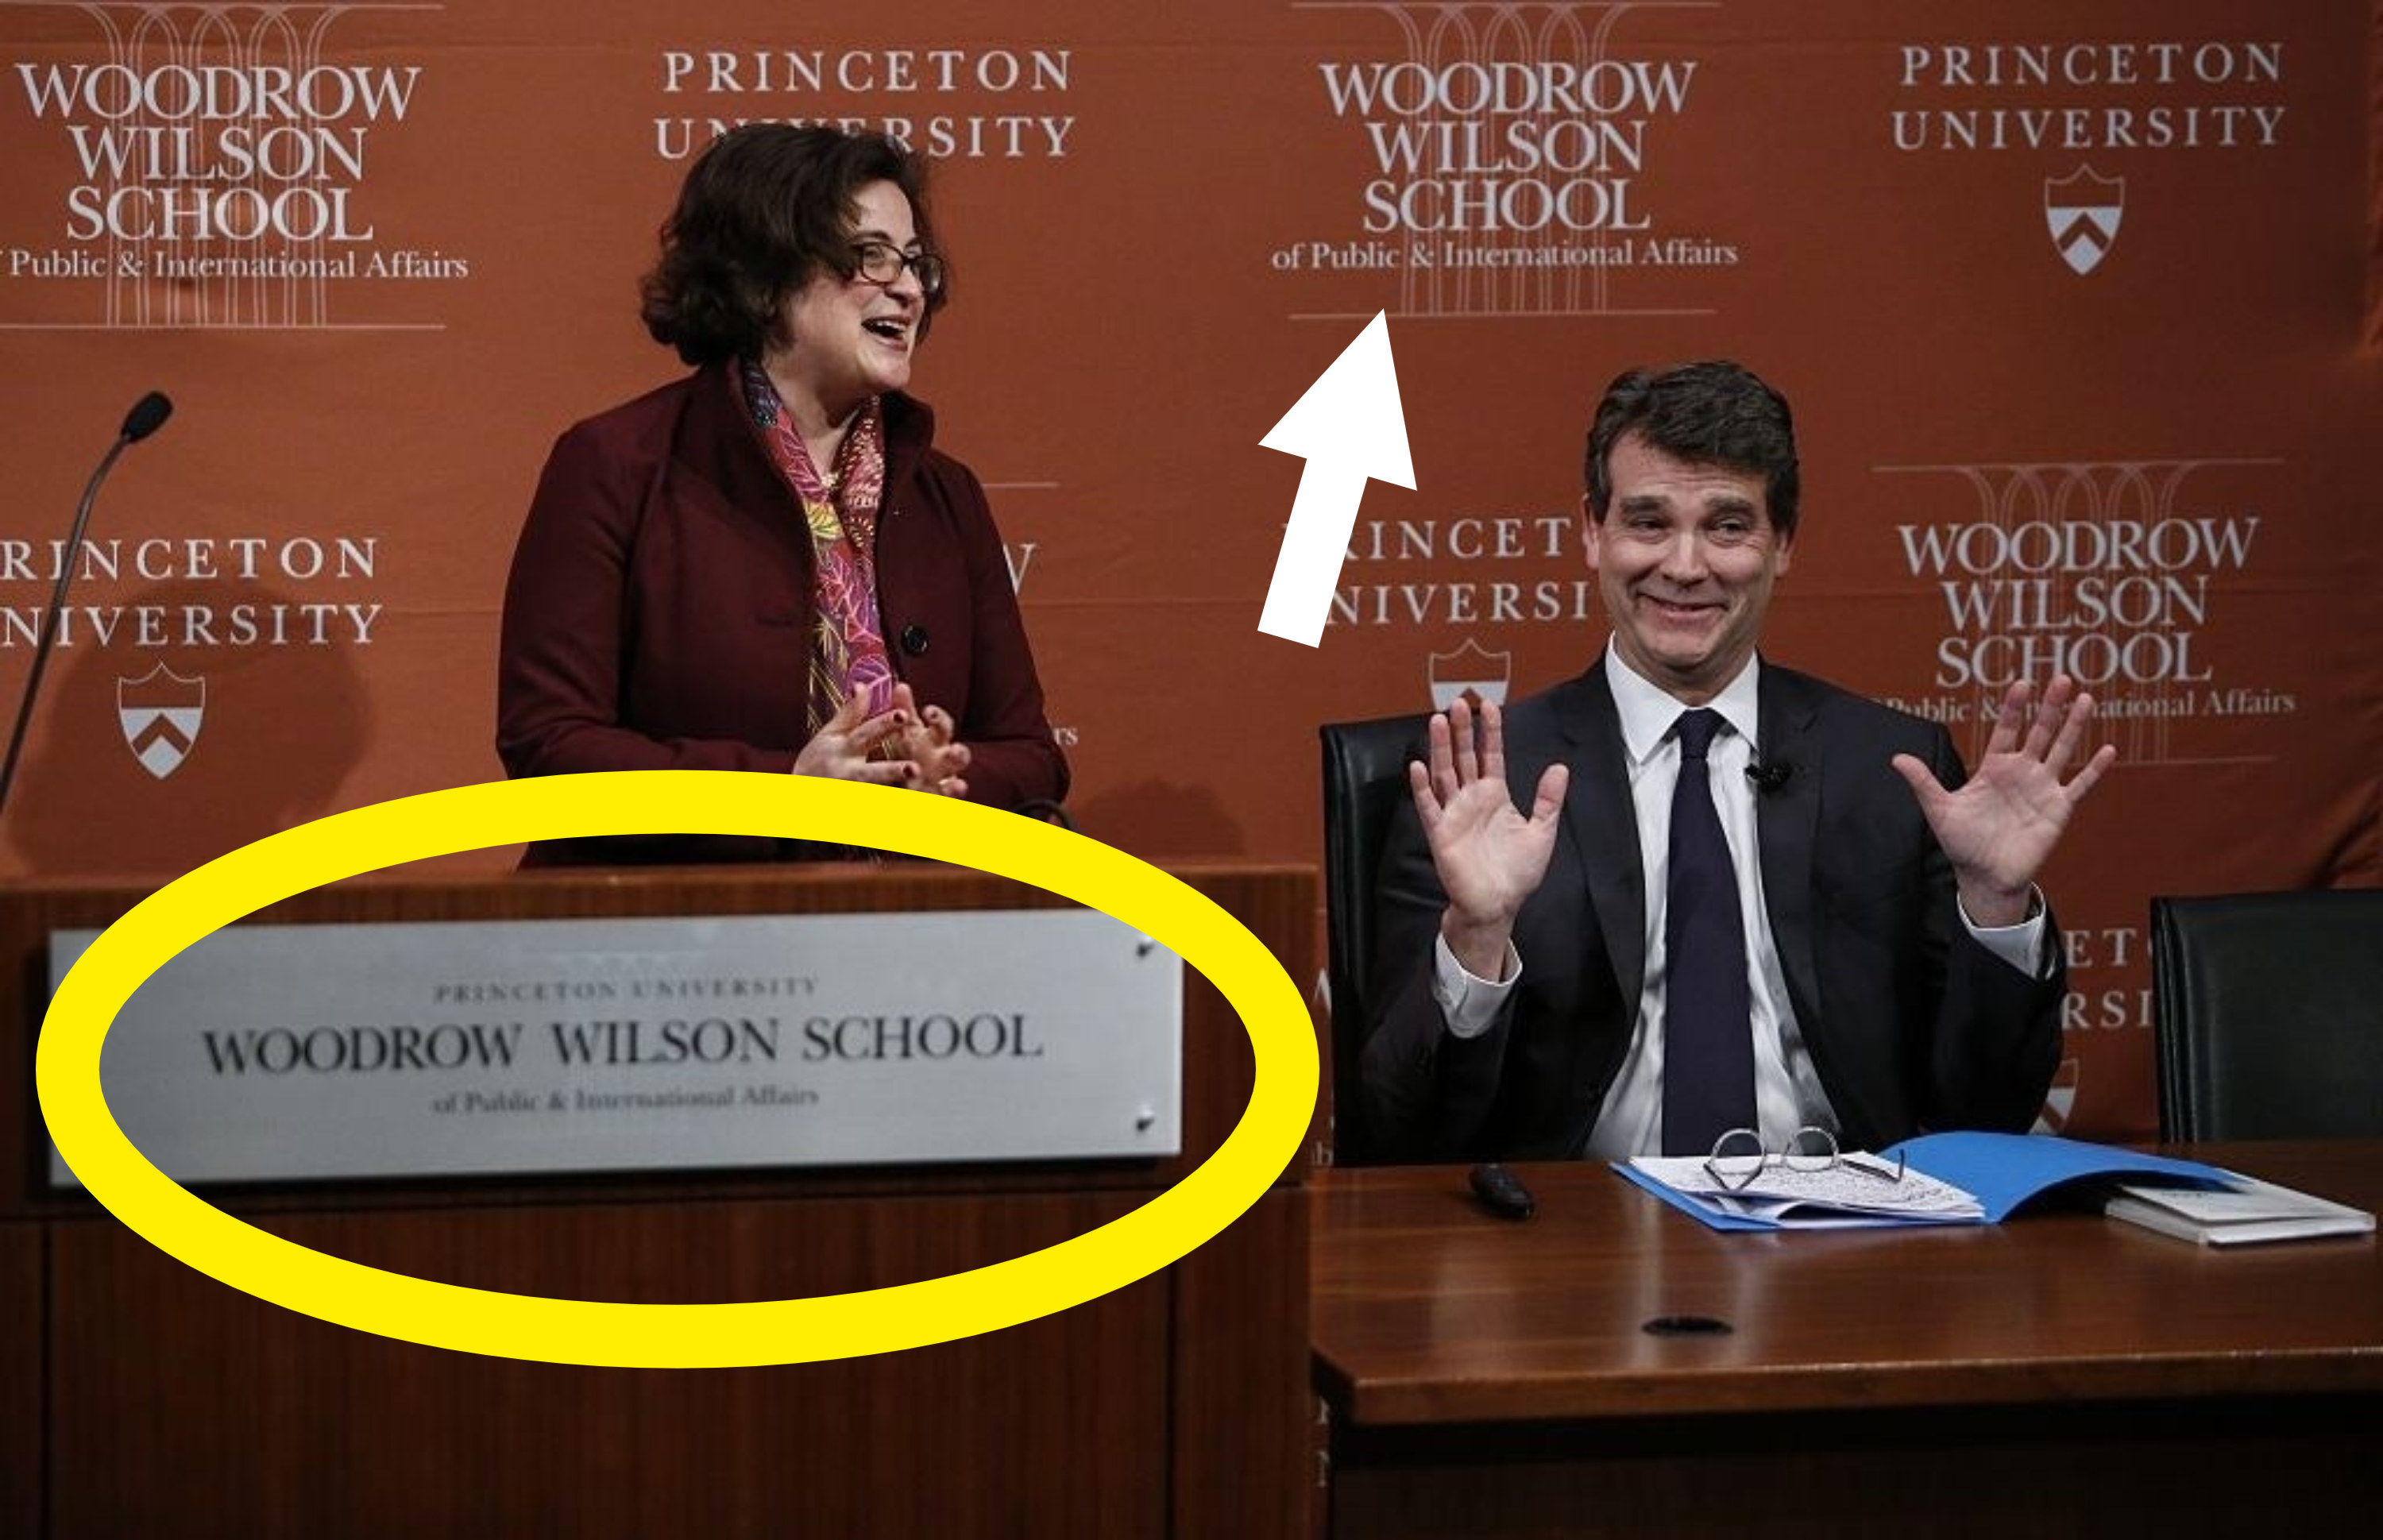 speakers at Princeton&#x27;s Woodrow Wilson School